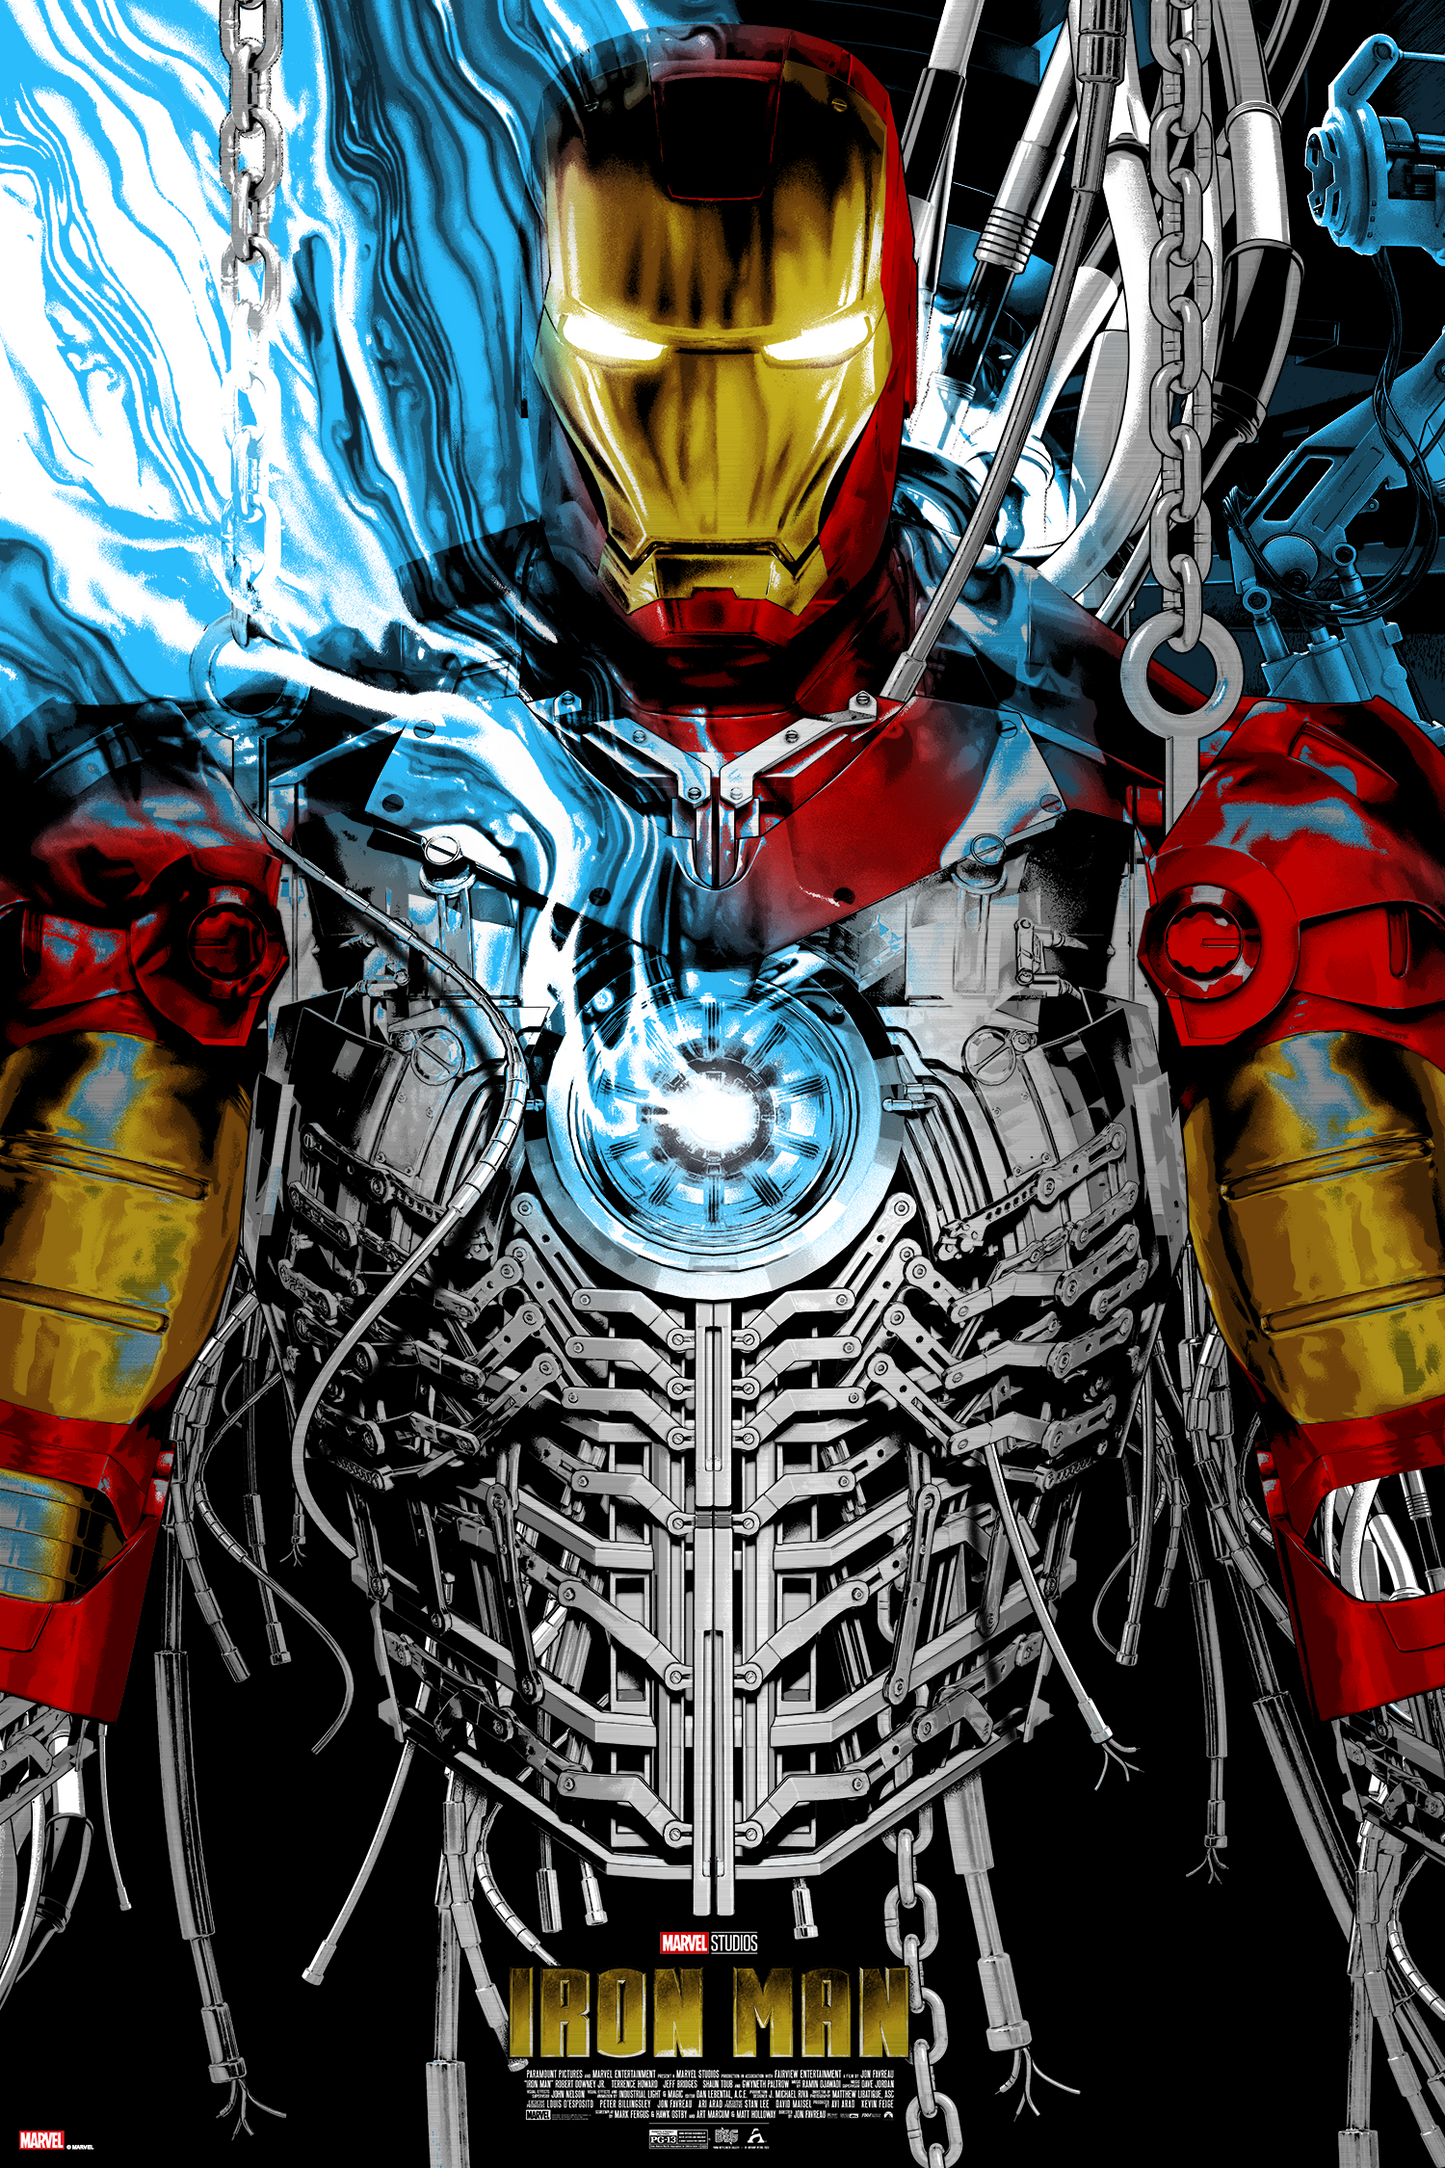 Anthony Petrie "Iron Man" Aluminum Print